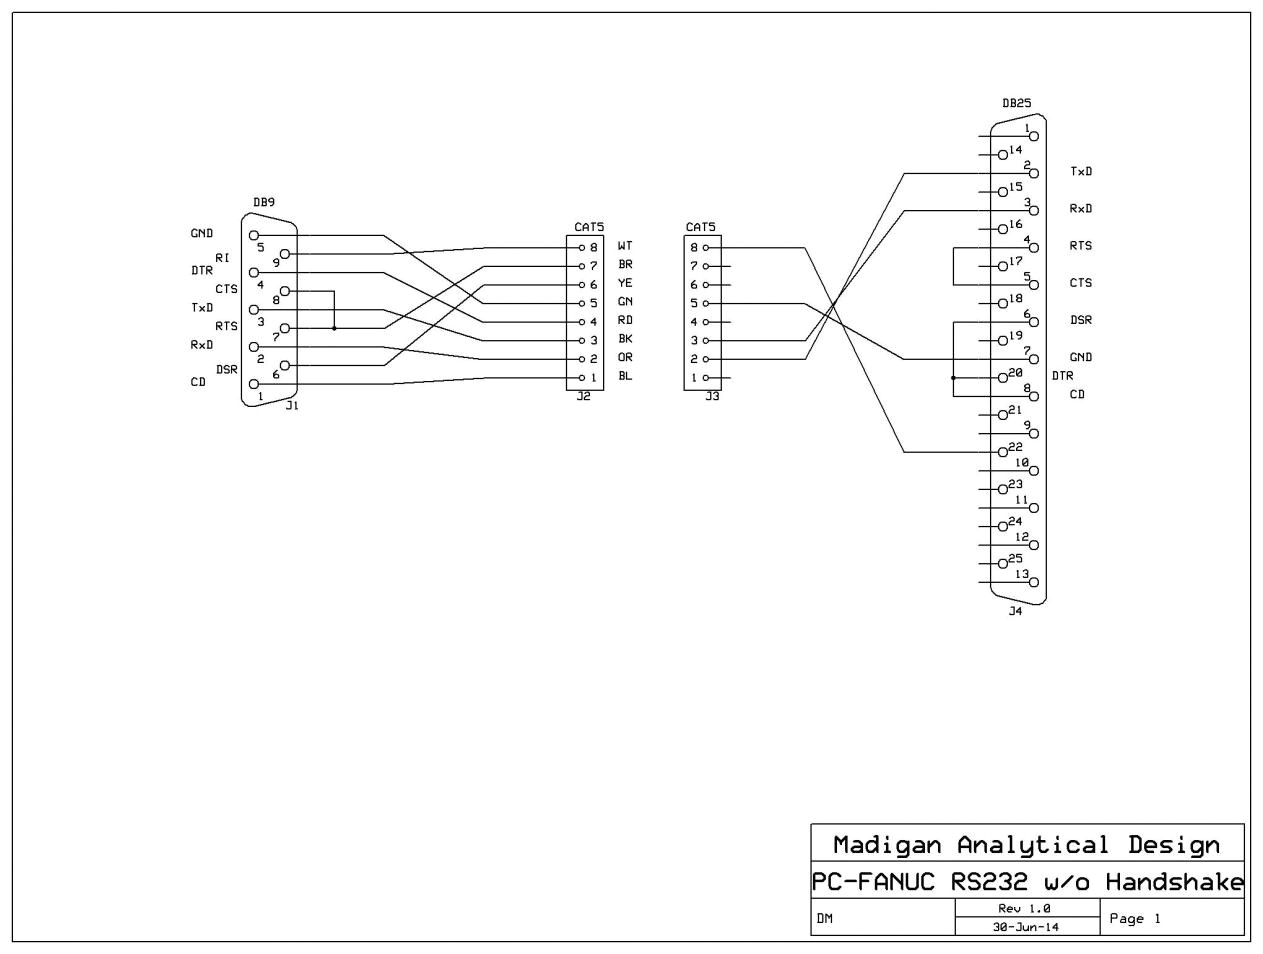 euromap 67 wiring diagram fresh fanuc cable wiring diagrams